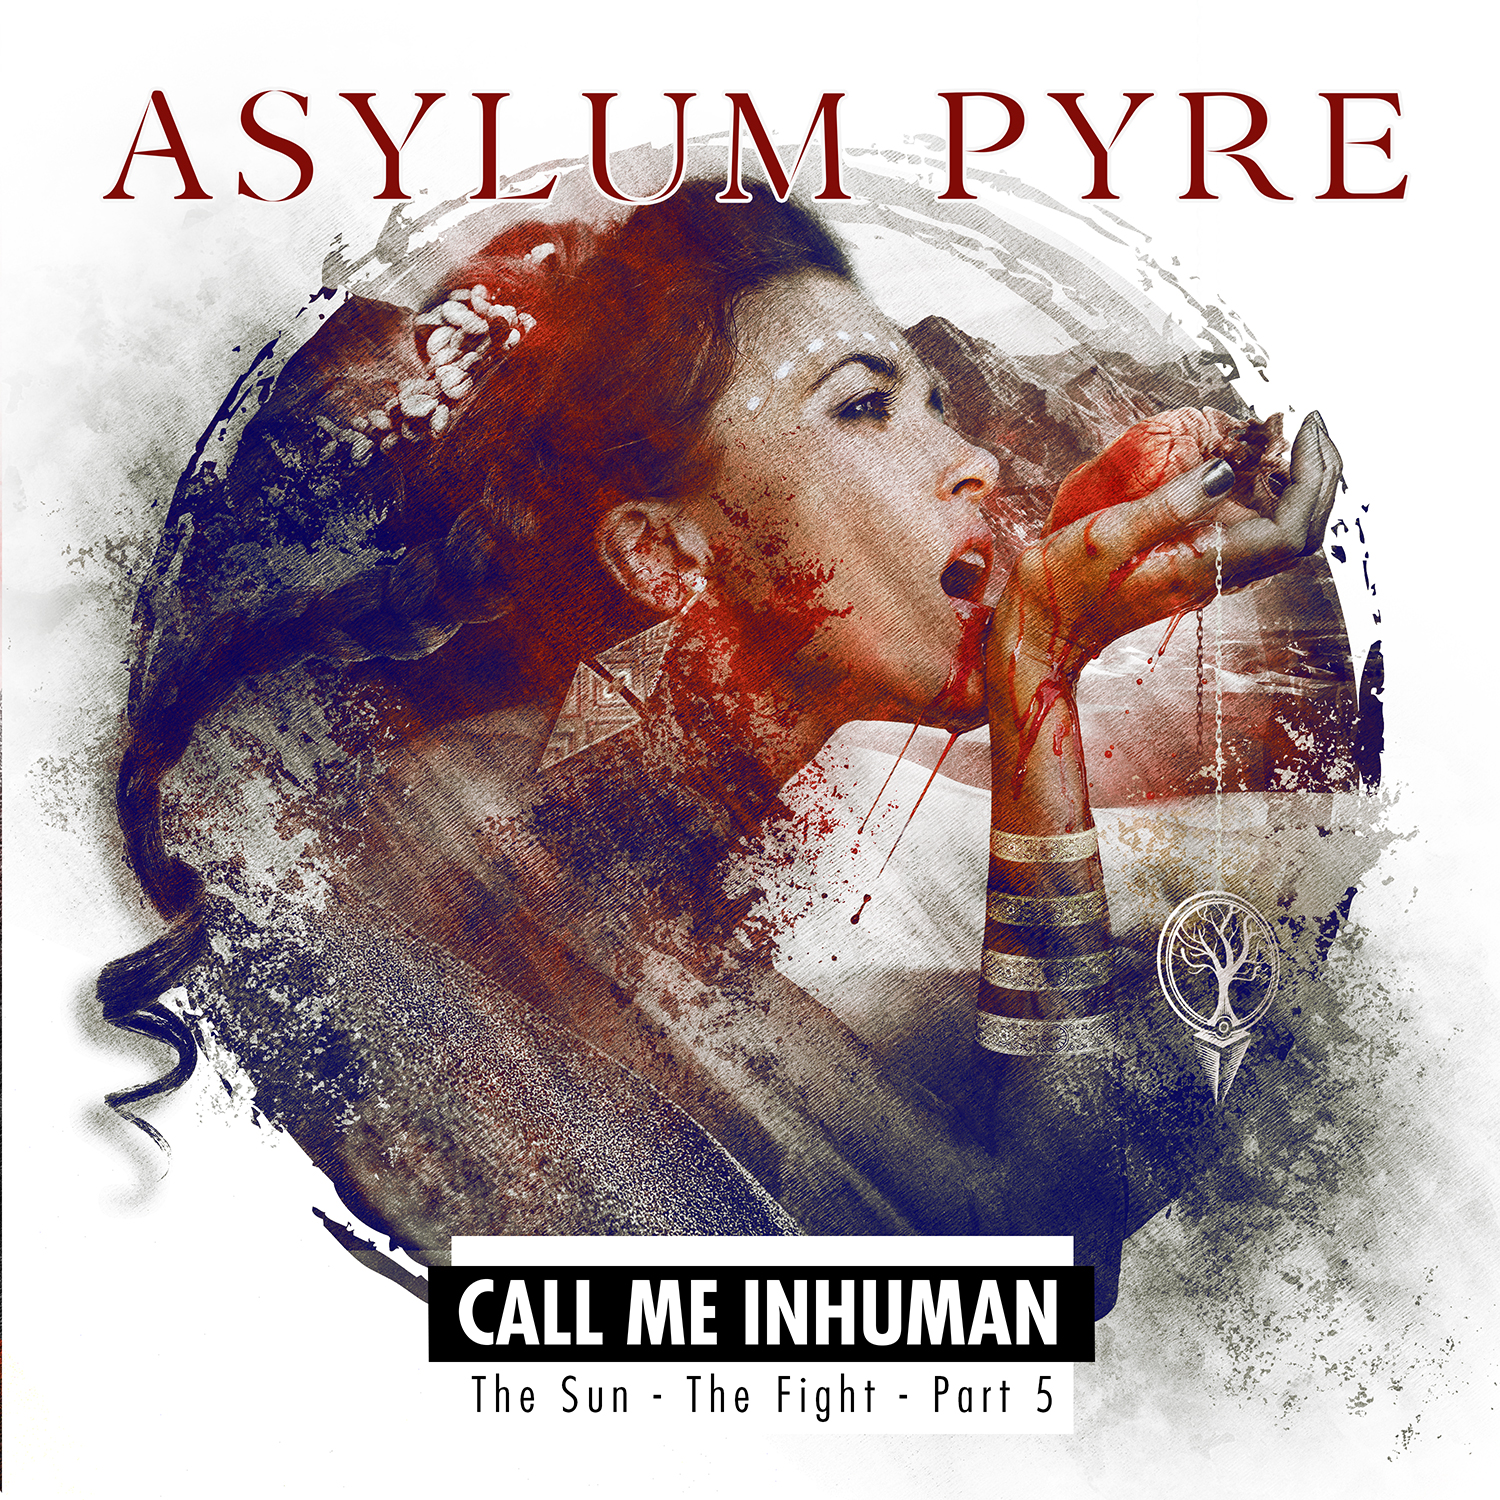 Asylum Pyre – "Call Me Inhuman"